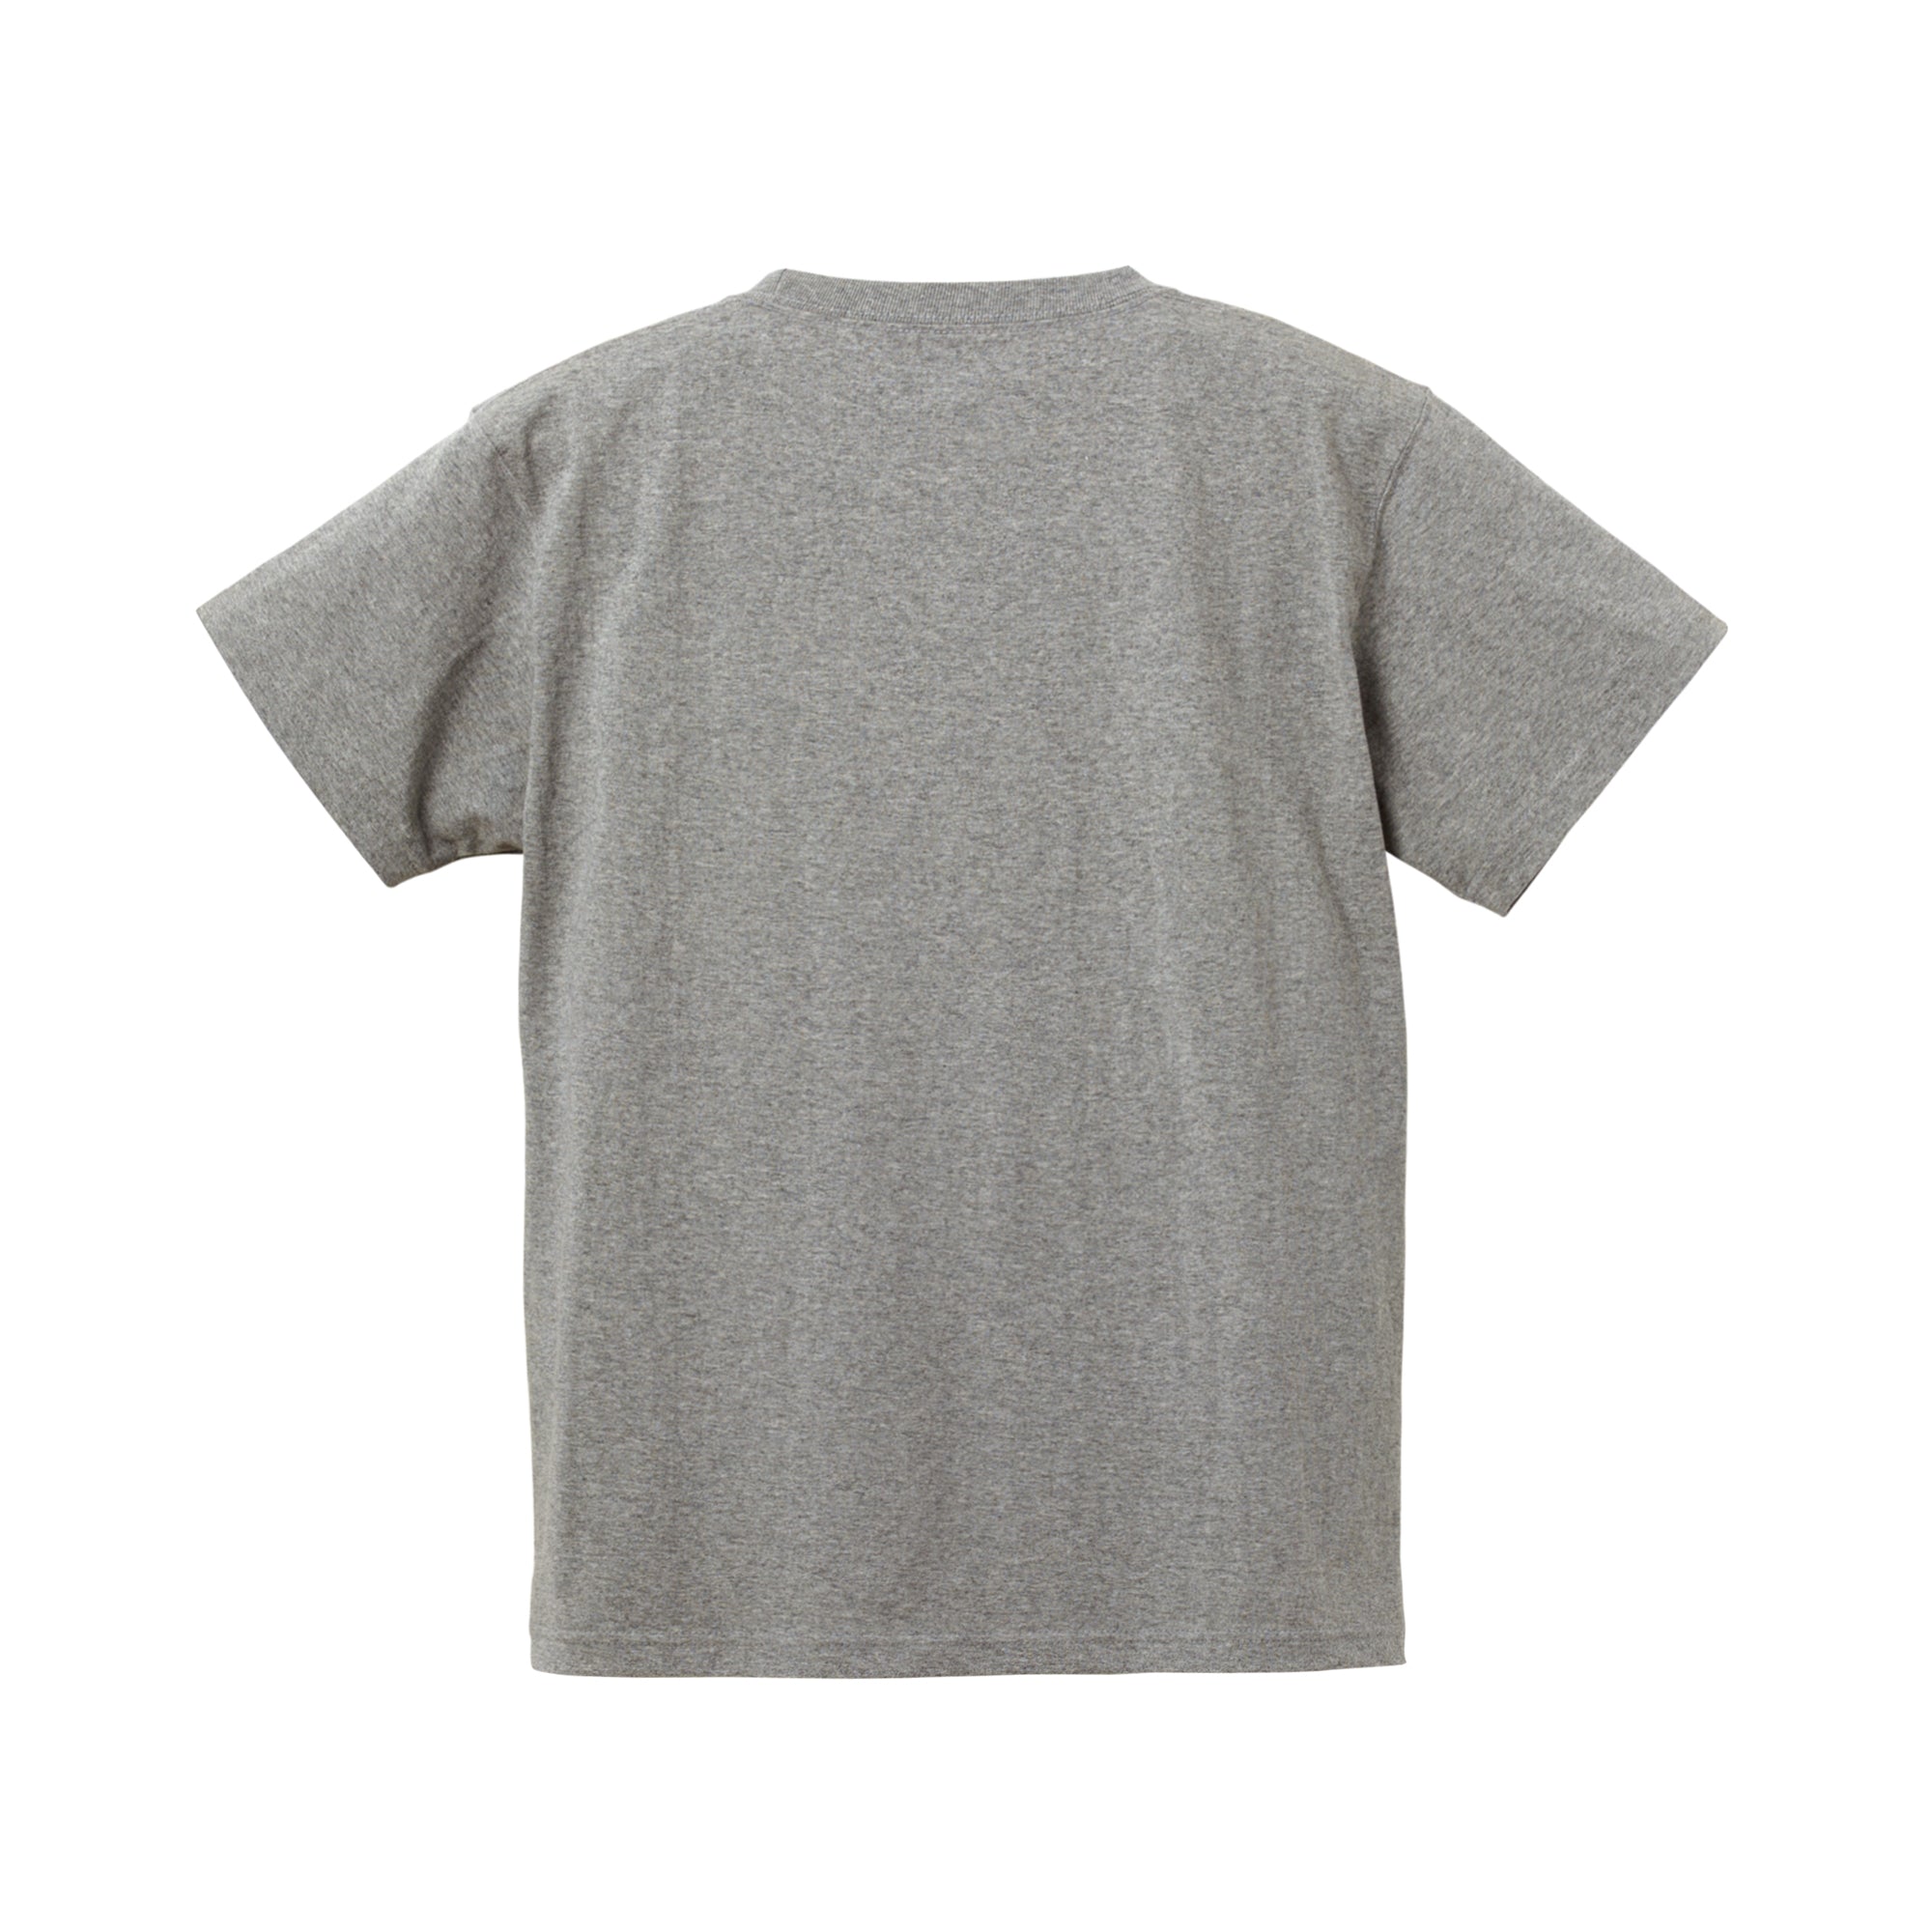 4253 - Super Heavyweight 7.1oz Pocket T-shirt - Grey